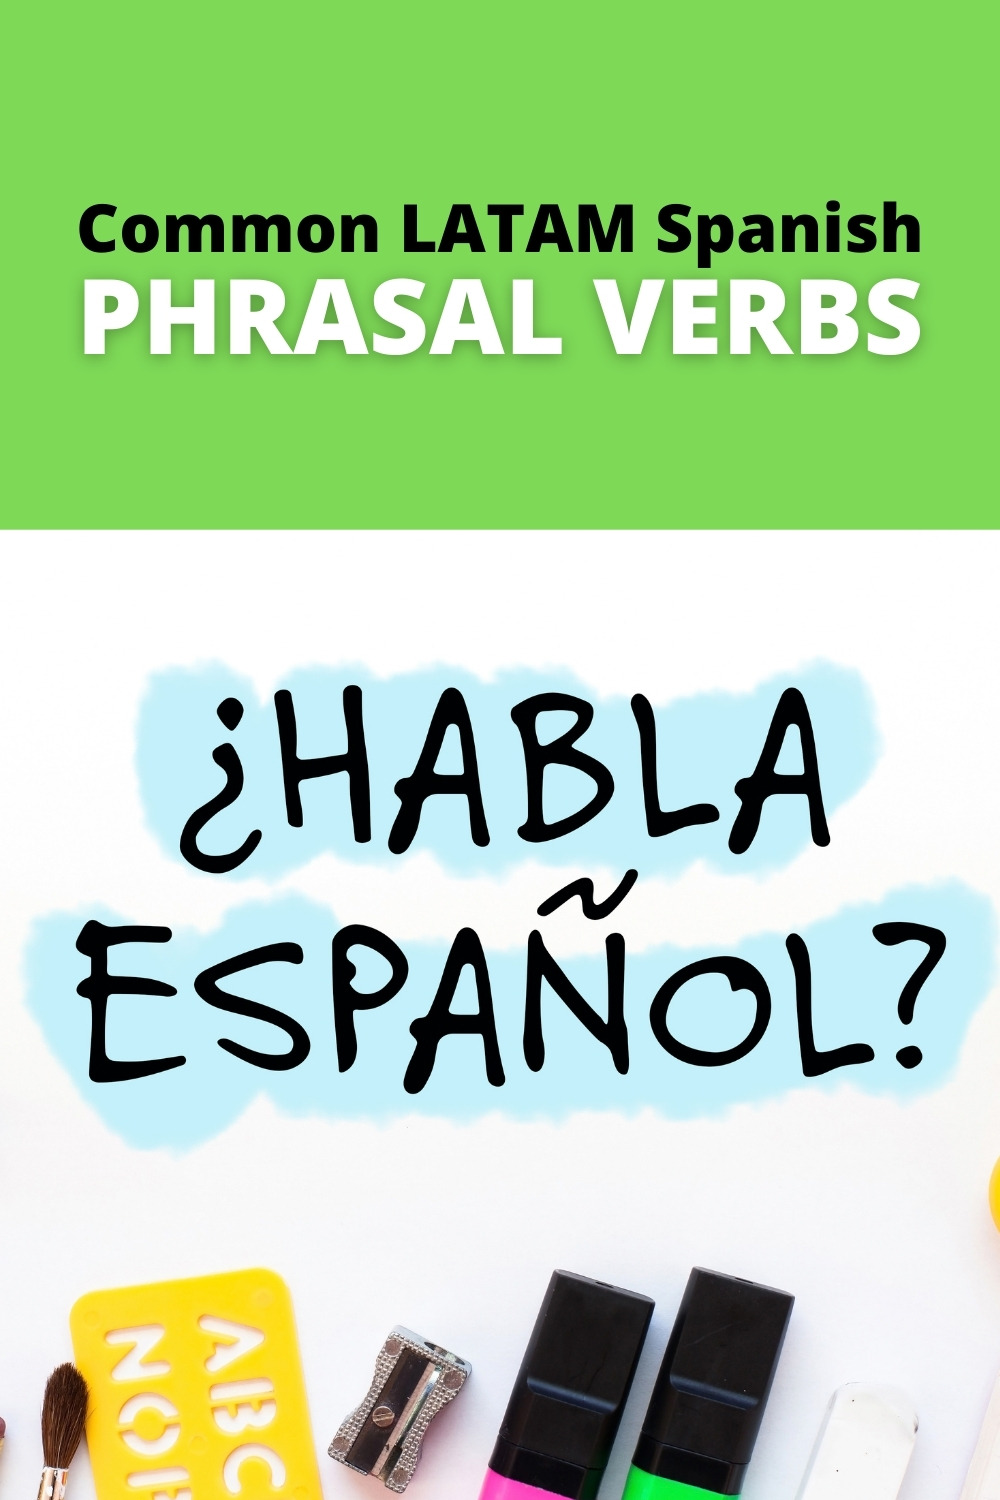 common latin american spanish phrasal verbs